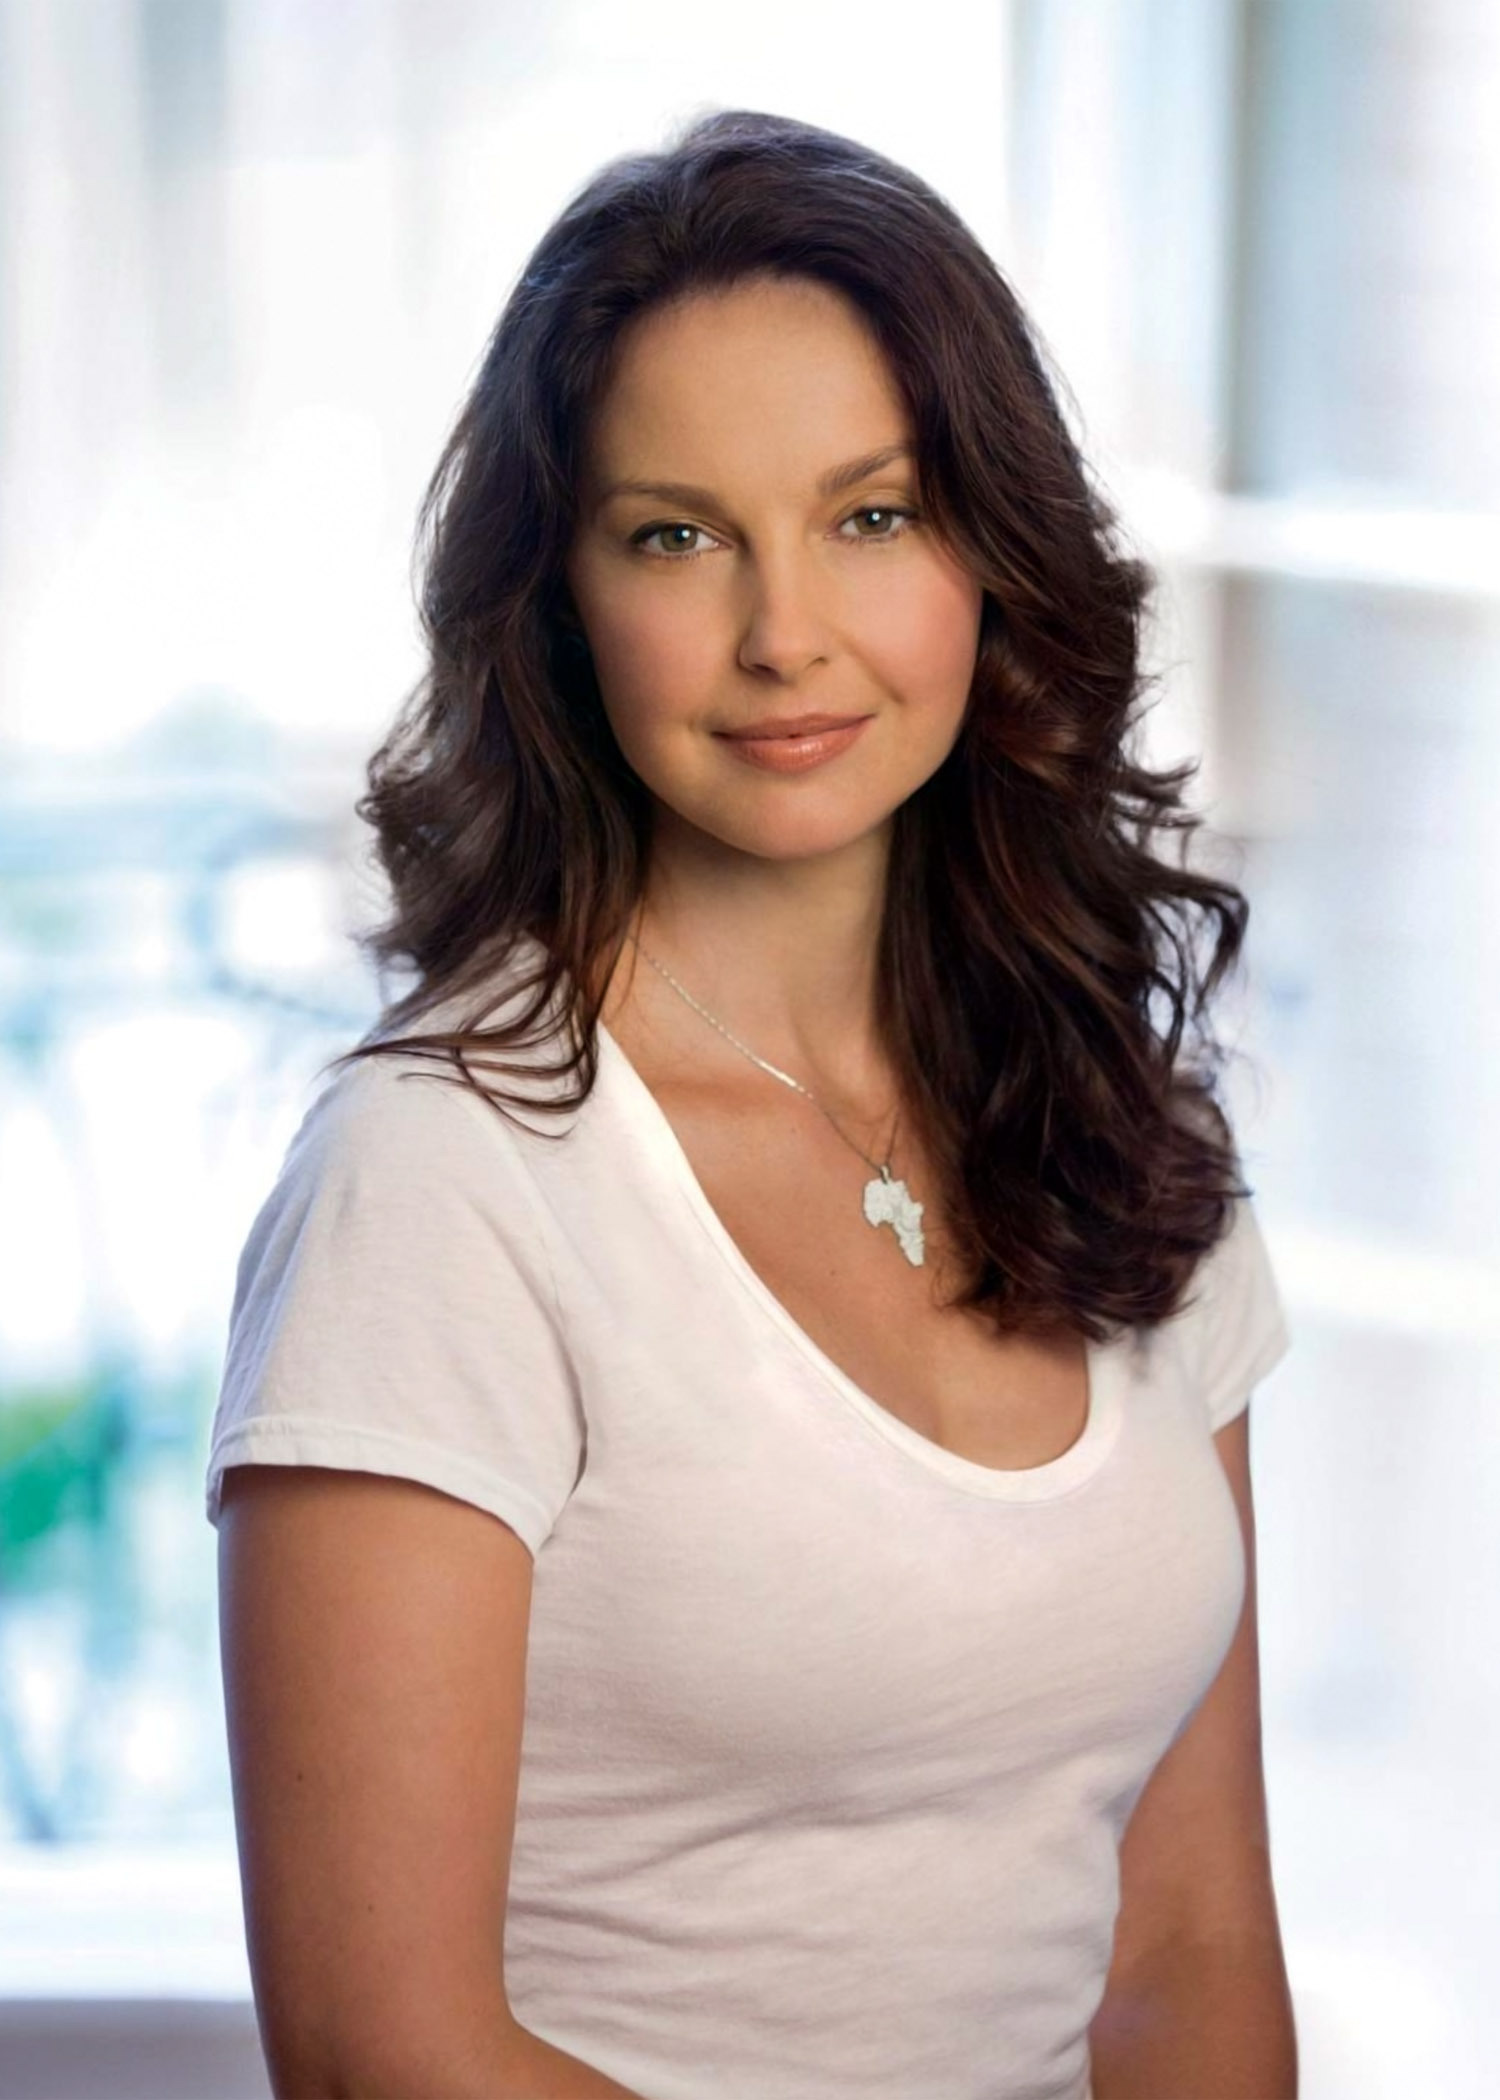 Judd hot ashley Ashley Judd: